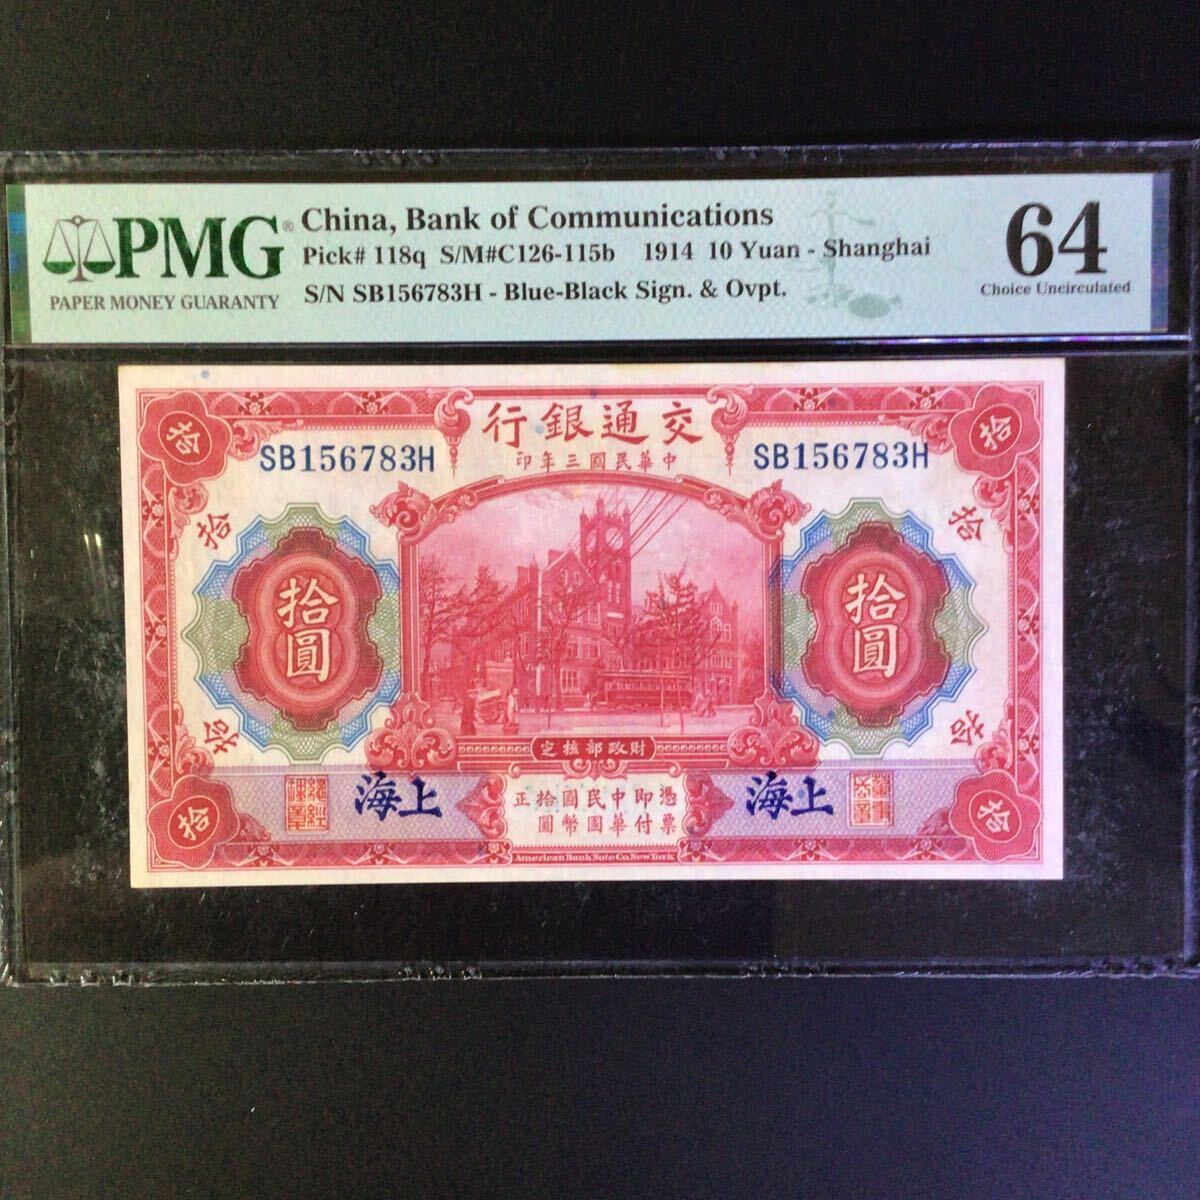 World Banknote Grading CHINA《Bank of Communications》 10 Yuan【1914】〔Shanghai〕『PMG Grading Choice Uncirculated 64』.._画像1